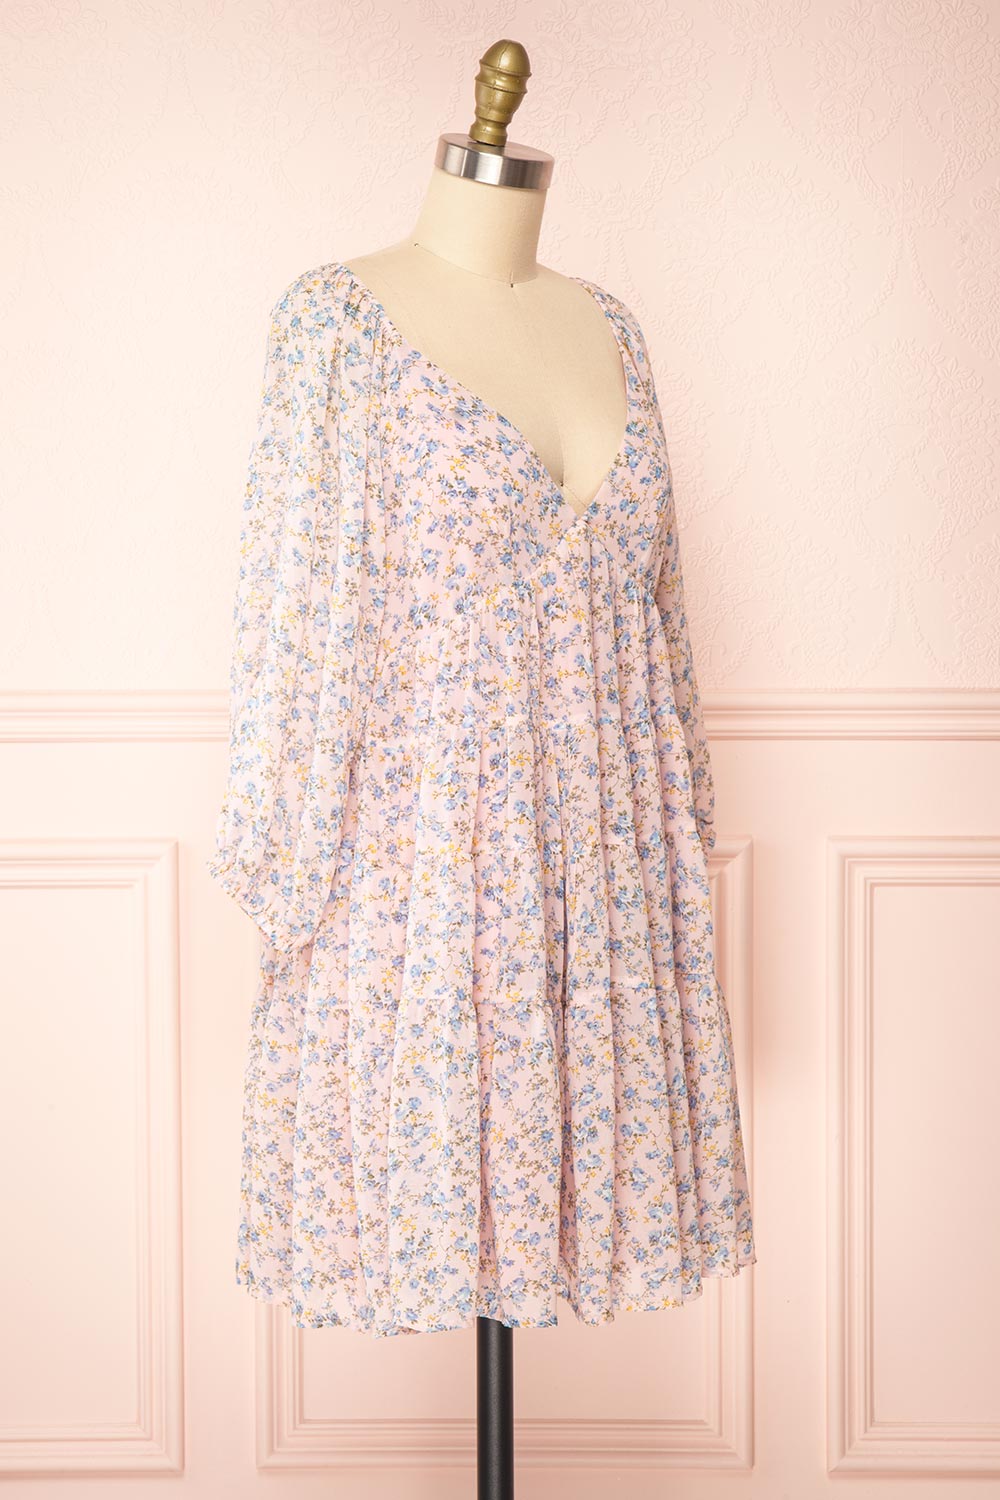 Snofried Pink Long Sleeve V-Neck Floral Dress | Boutique 1861 side view 